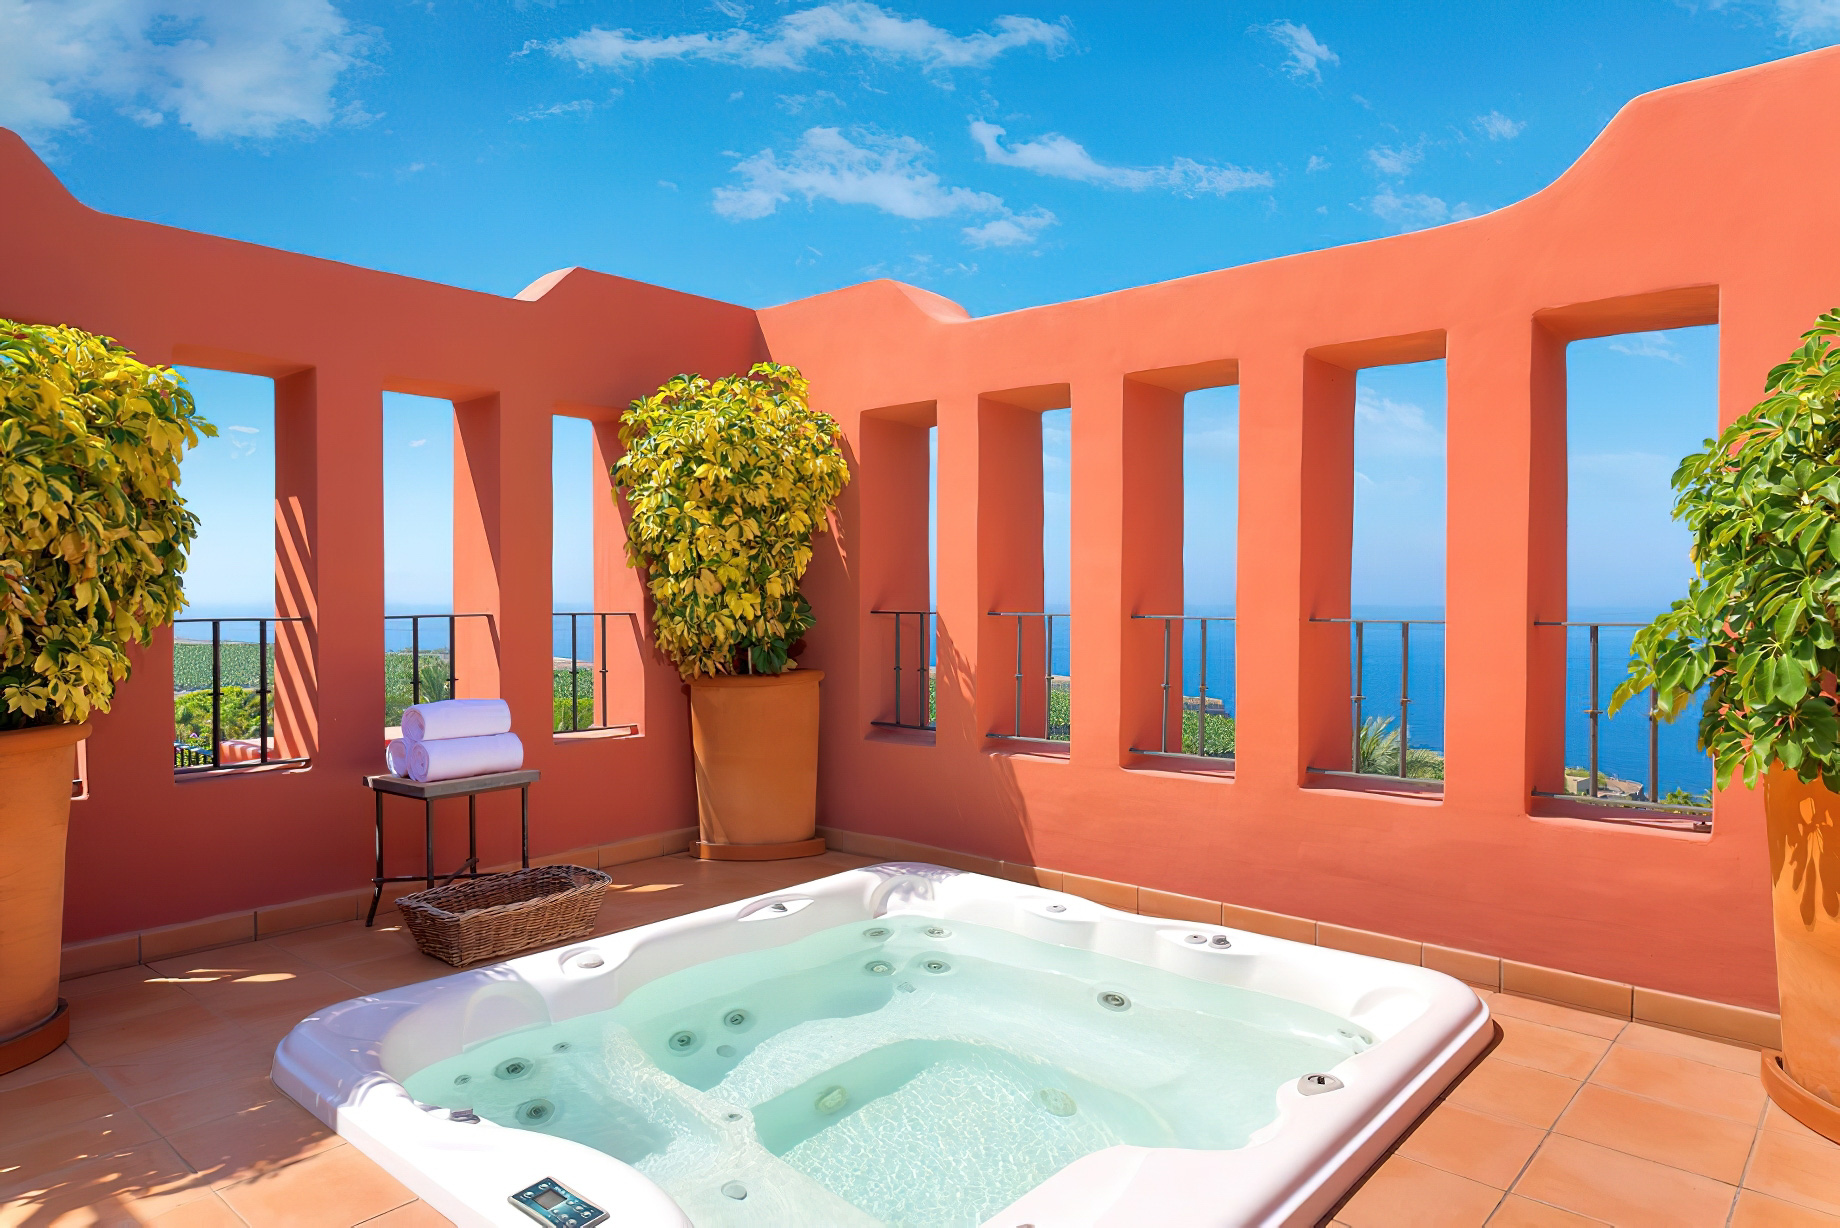 The Ritz-Carlton, Abama Resort – Santa Cruz de Tenerife, Spain – The Ritz-Carlton Suite Outdoor Hot Tub